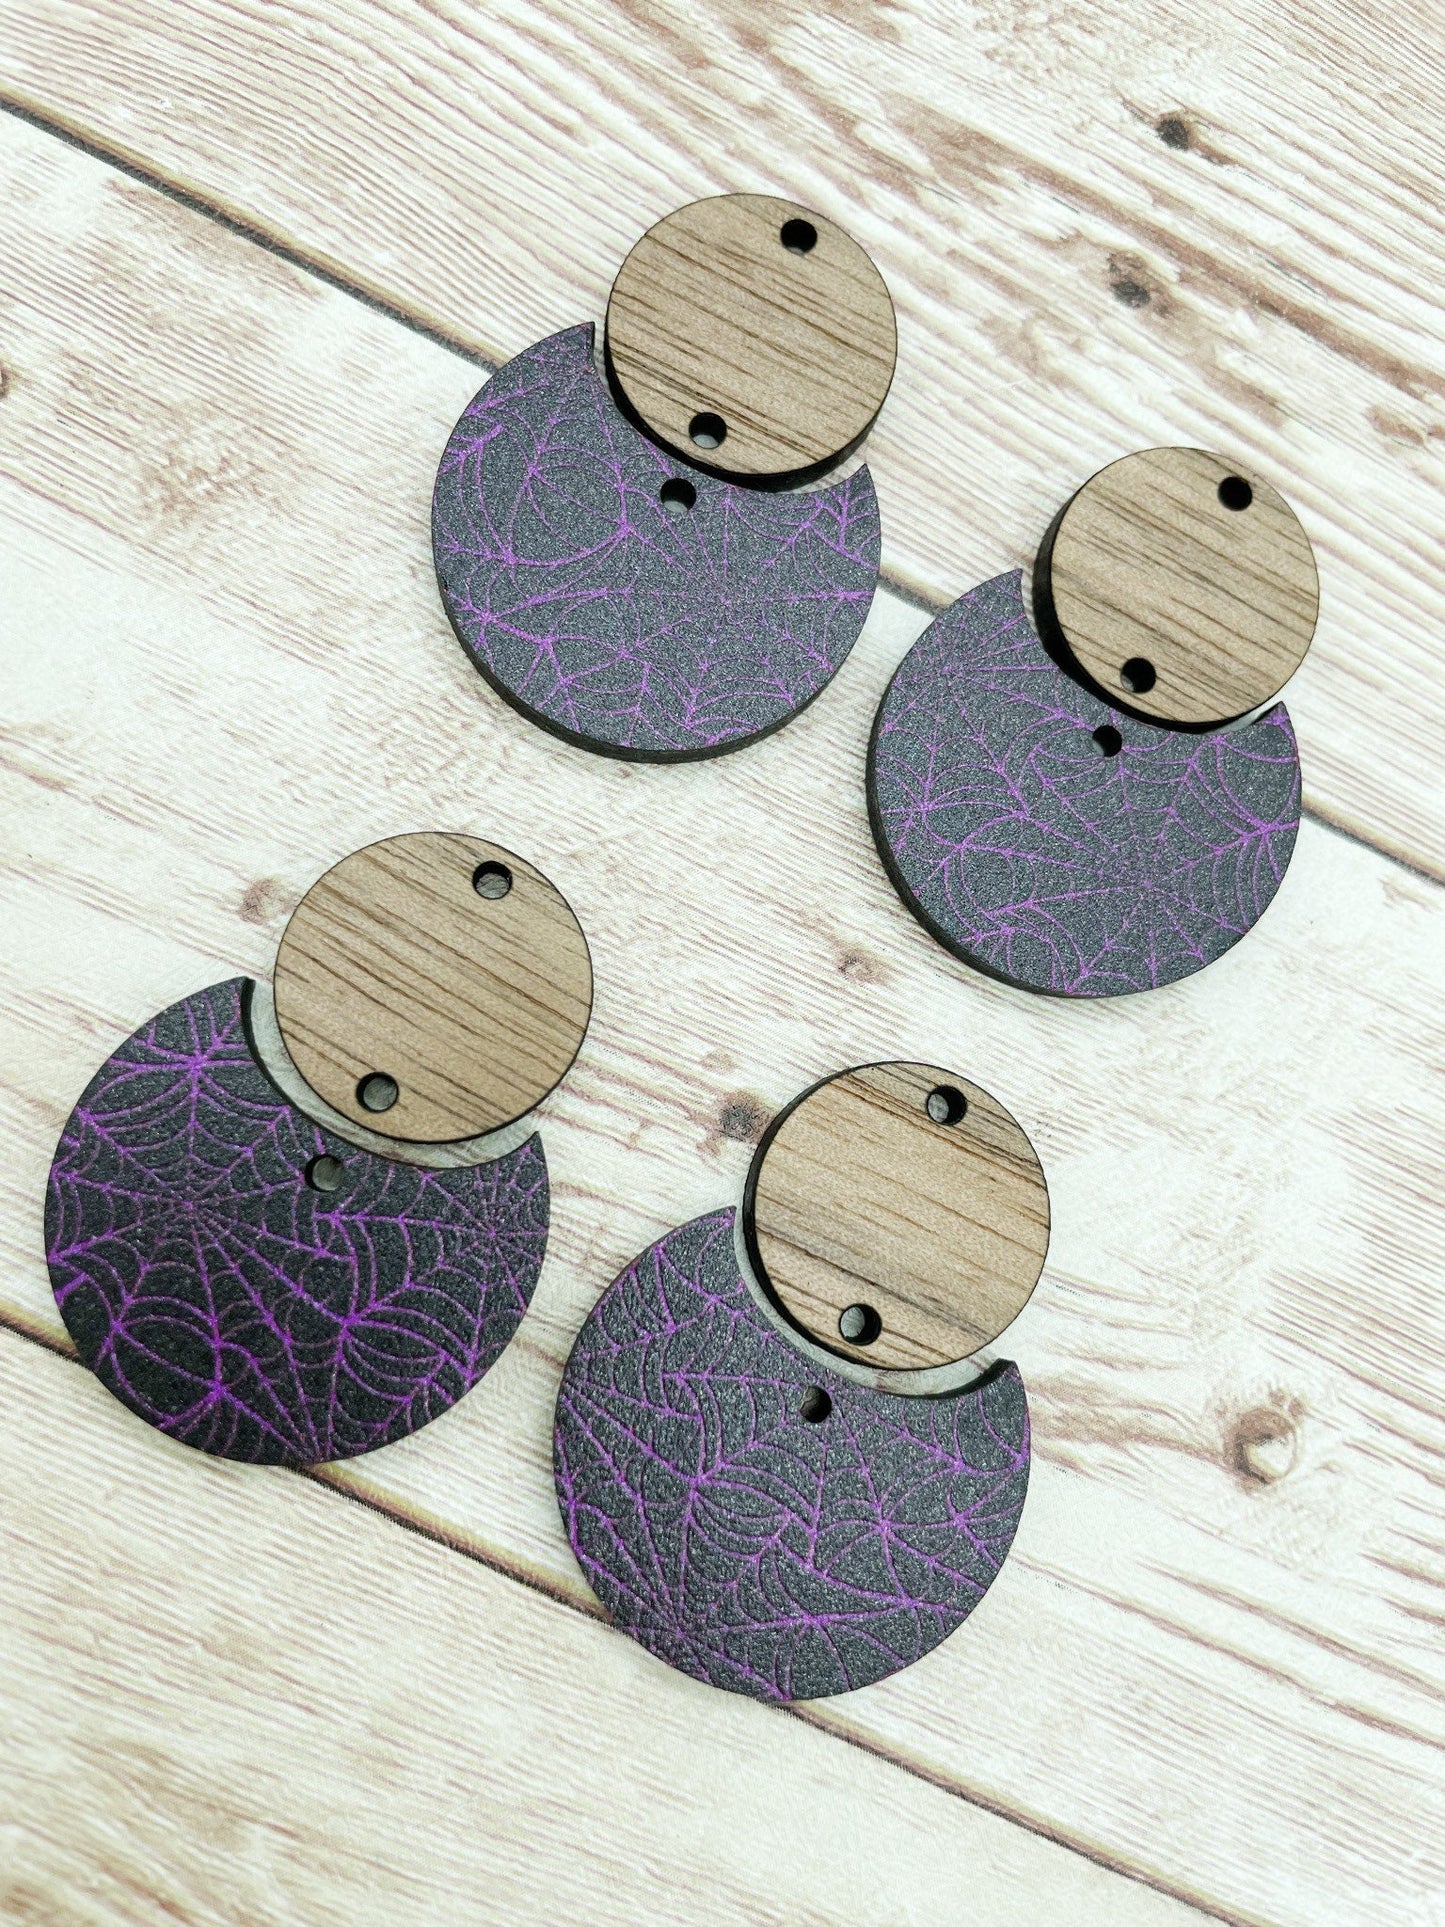 Patterned Halloween Purple Black Spiderweb and Wood Circle Set Earring Blanks, DIY Jewelry Making